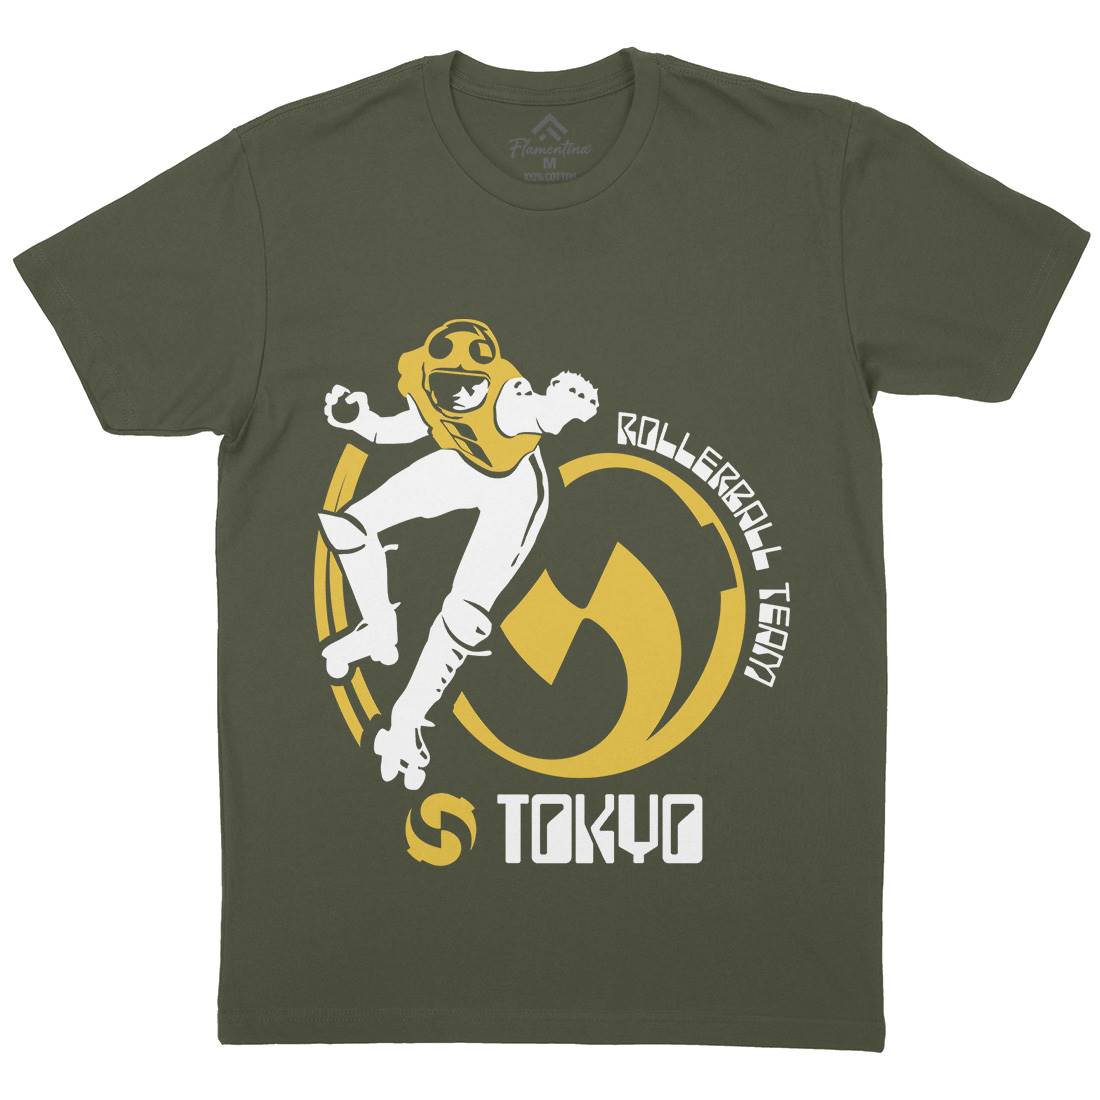 Tokyo Mens Organic Crew Neck T-Shirt Sport D263